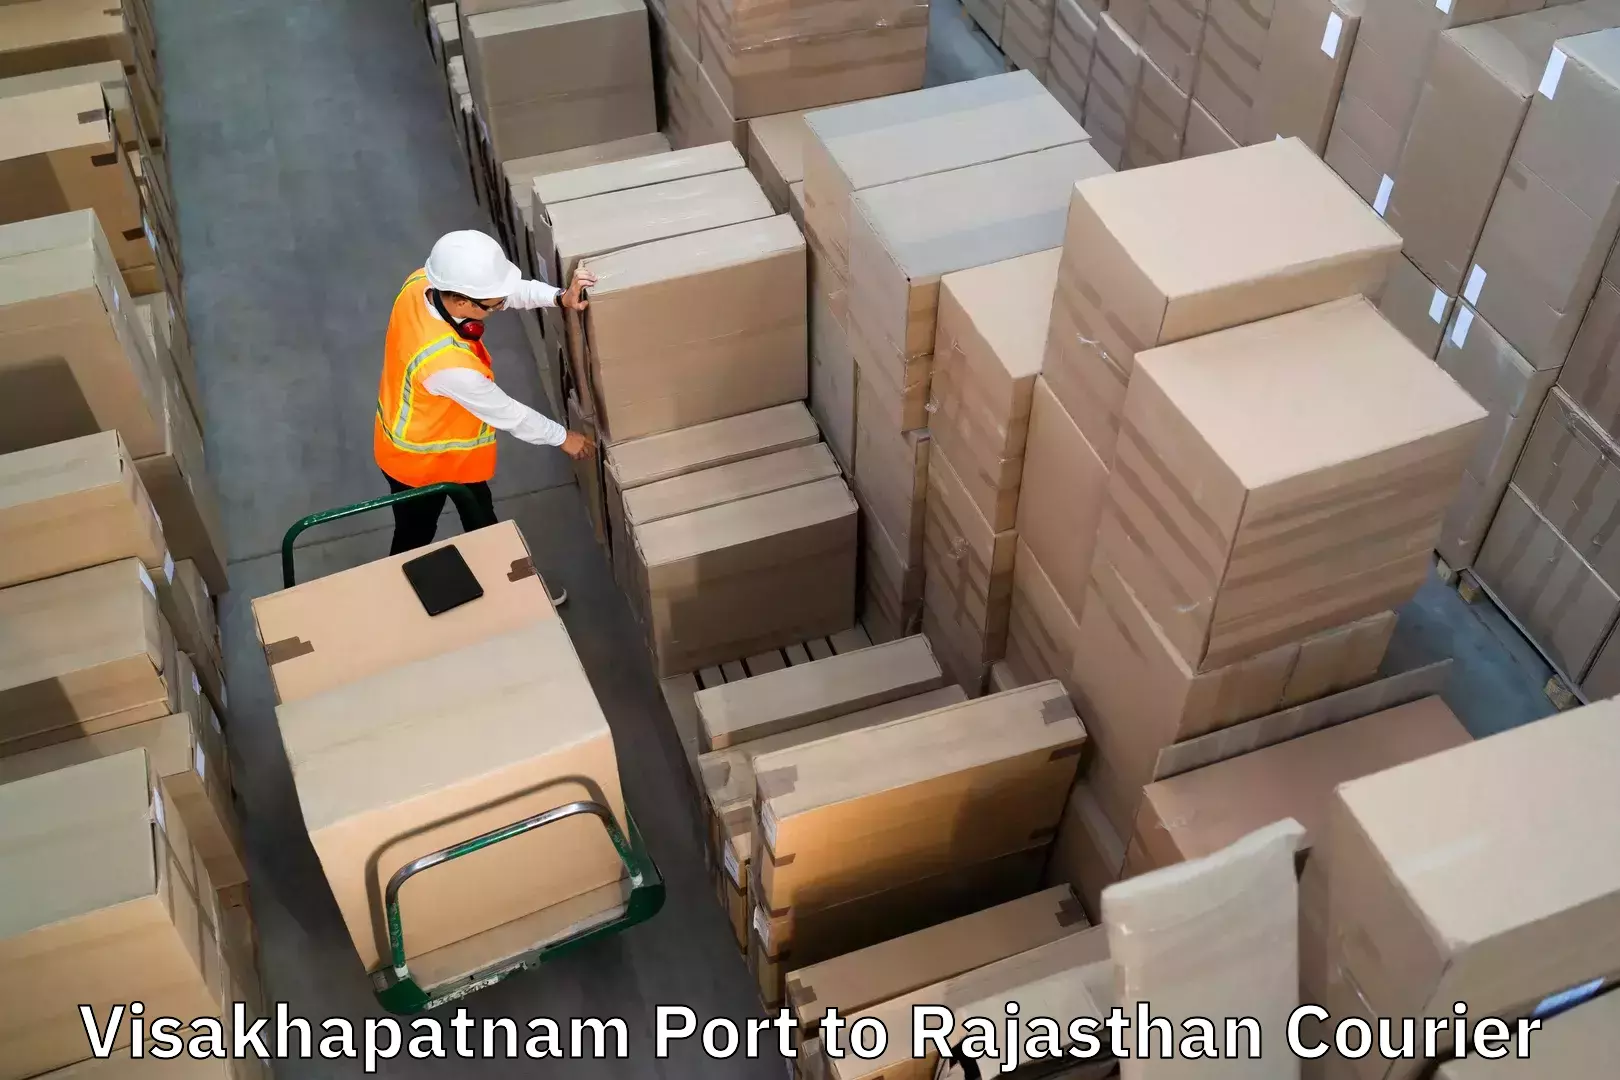 Same day luggage service Visakhapatnam Port to IIIT Kota